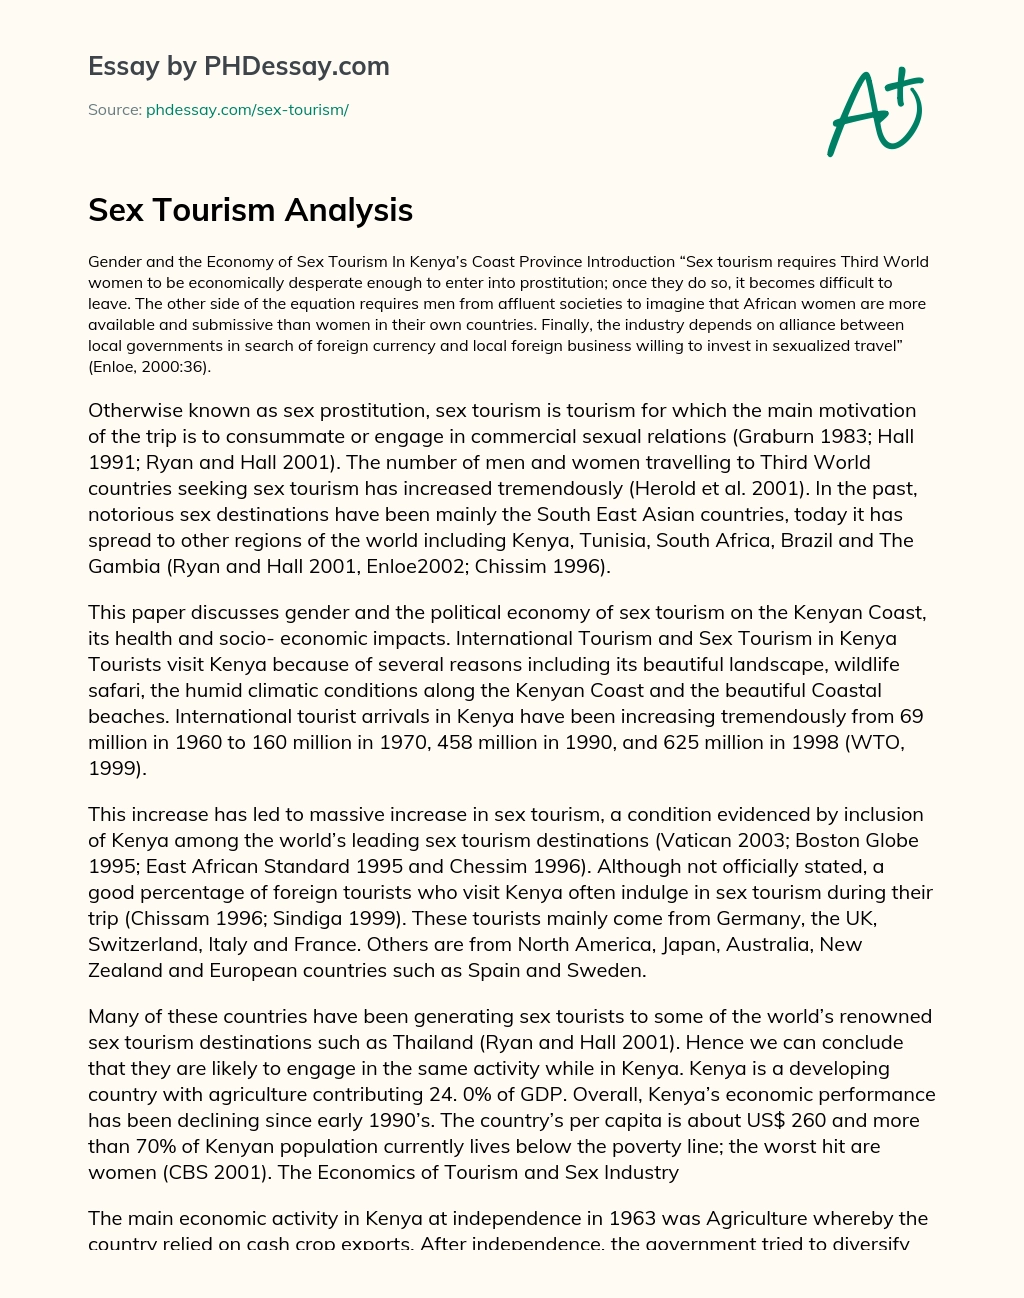 Sex Tourism Analysis essay